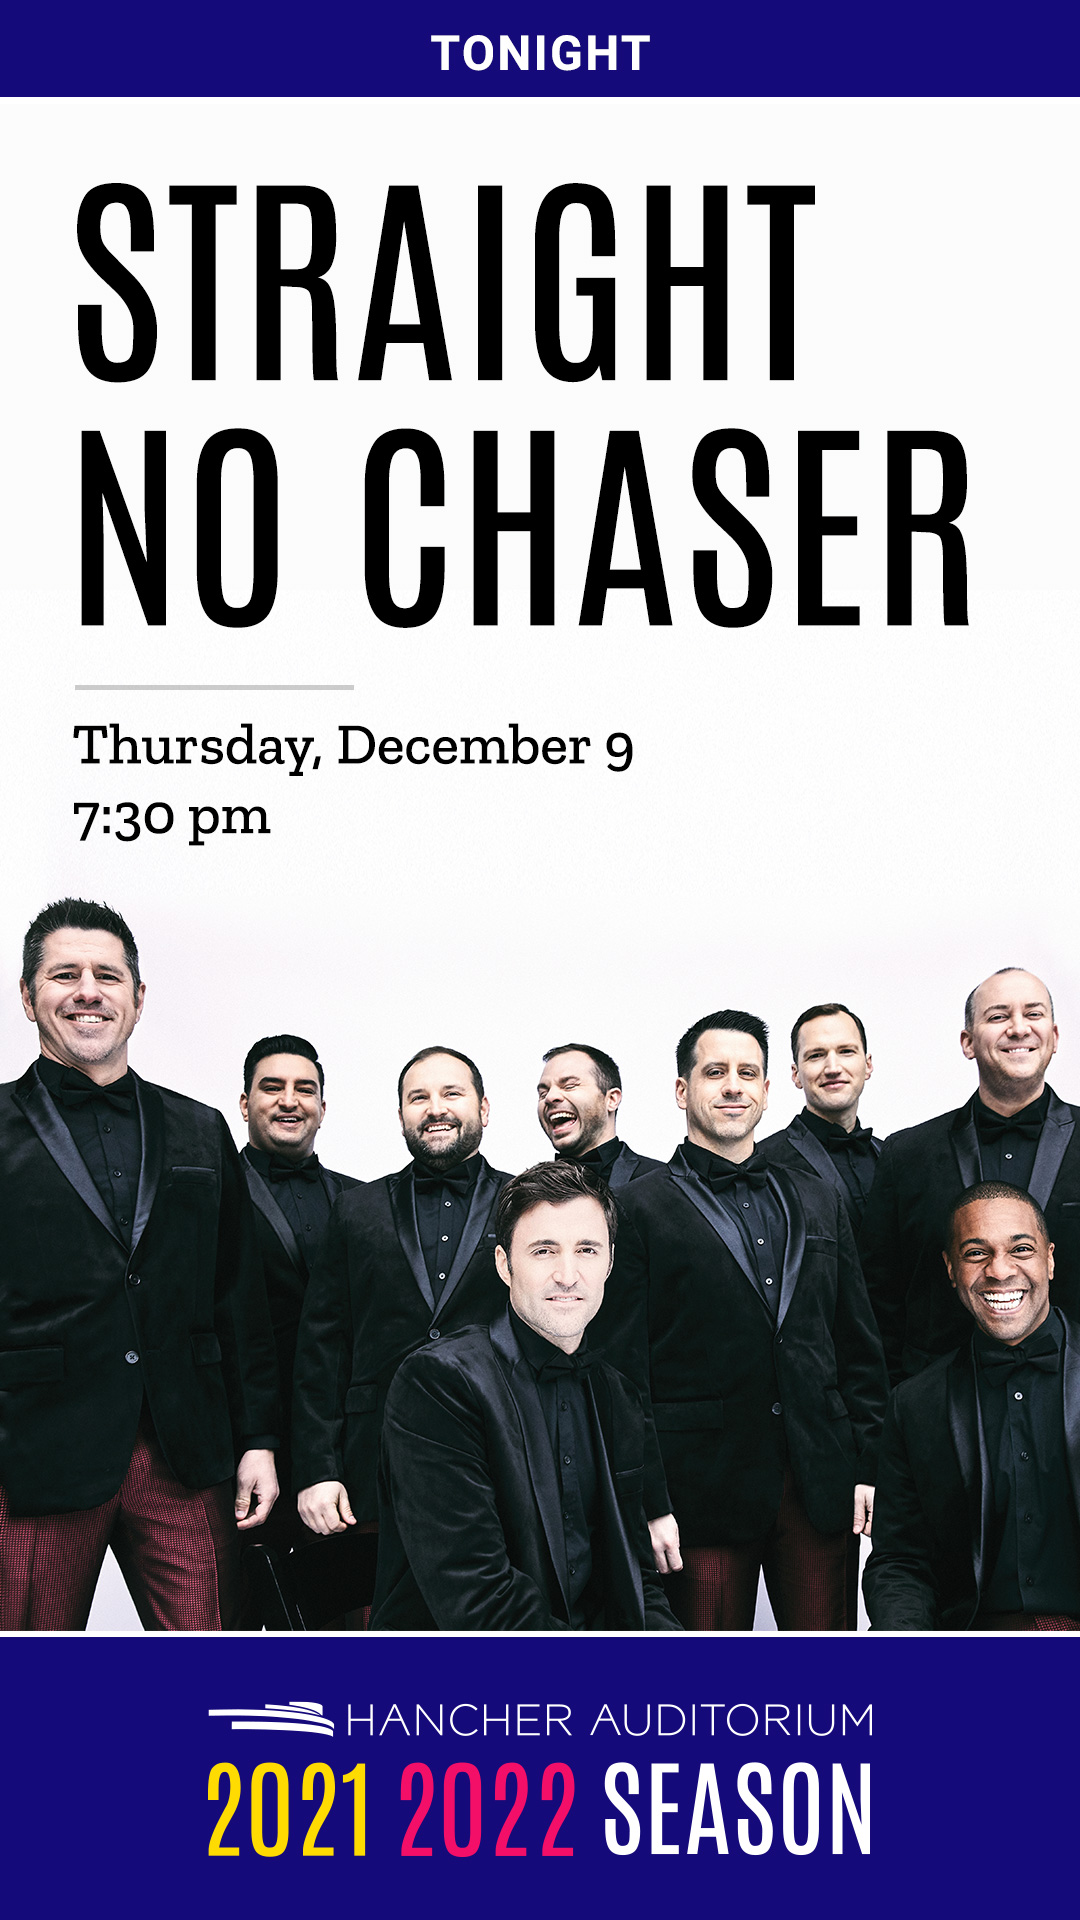 Straight No Chaser - Tonight